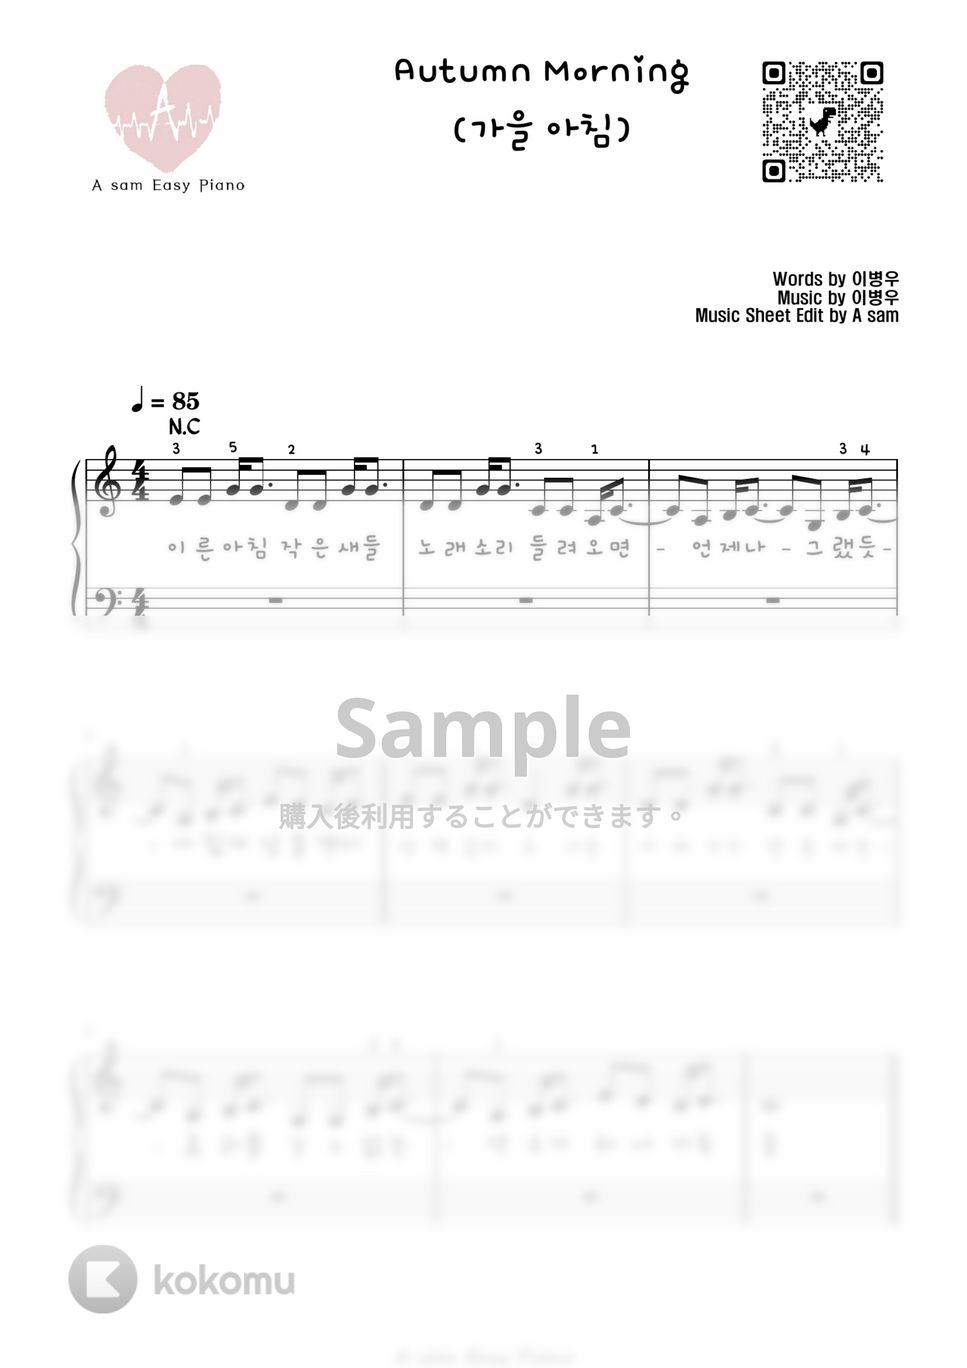 IU - Autumn Morning (ピアノ両手 / 指番号 / 歌詞あり) by A-sam